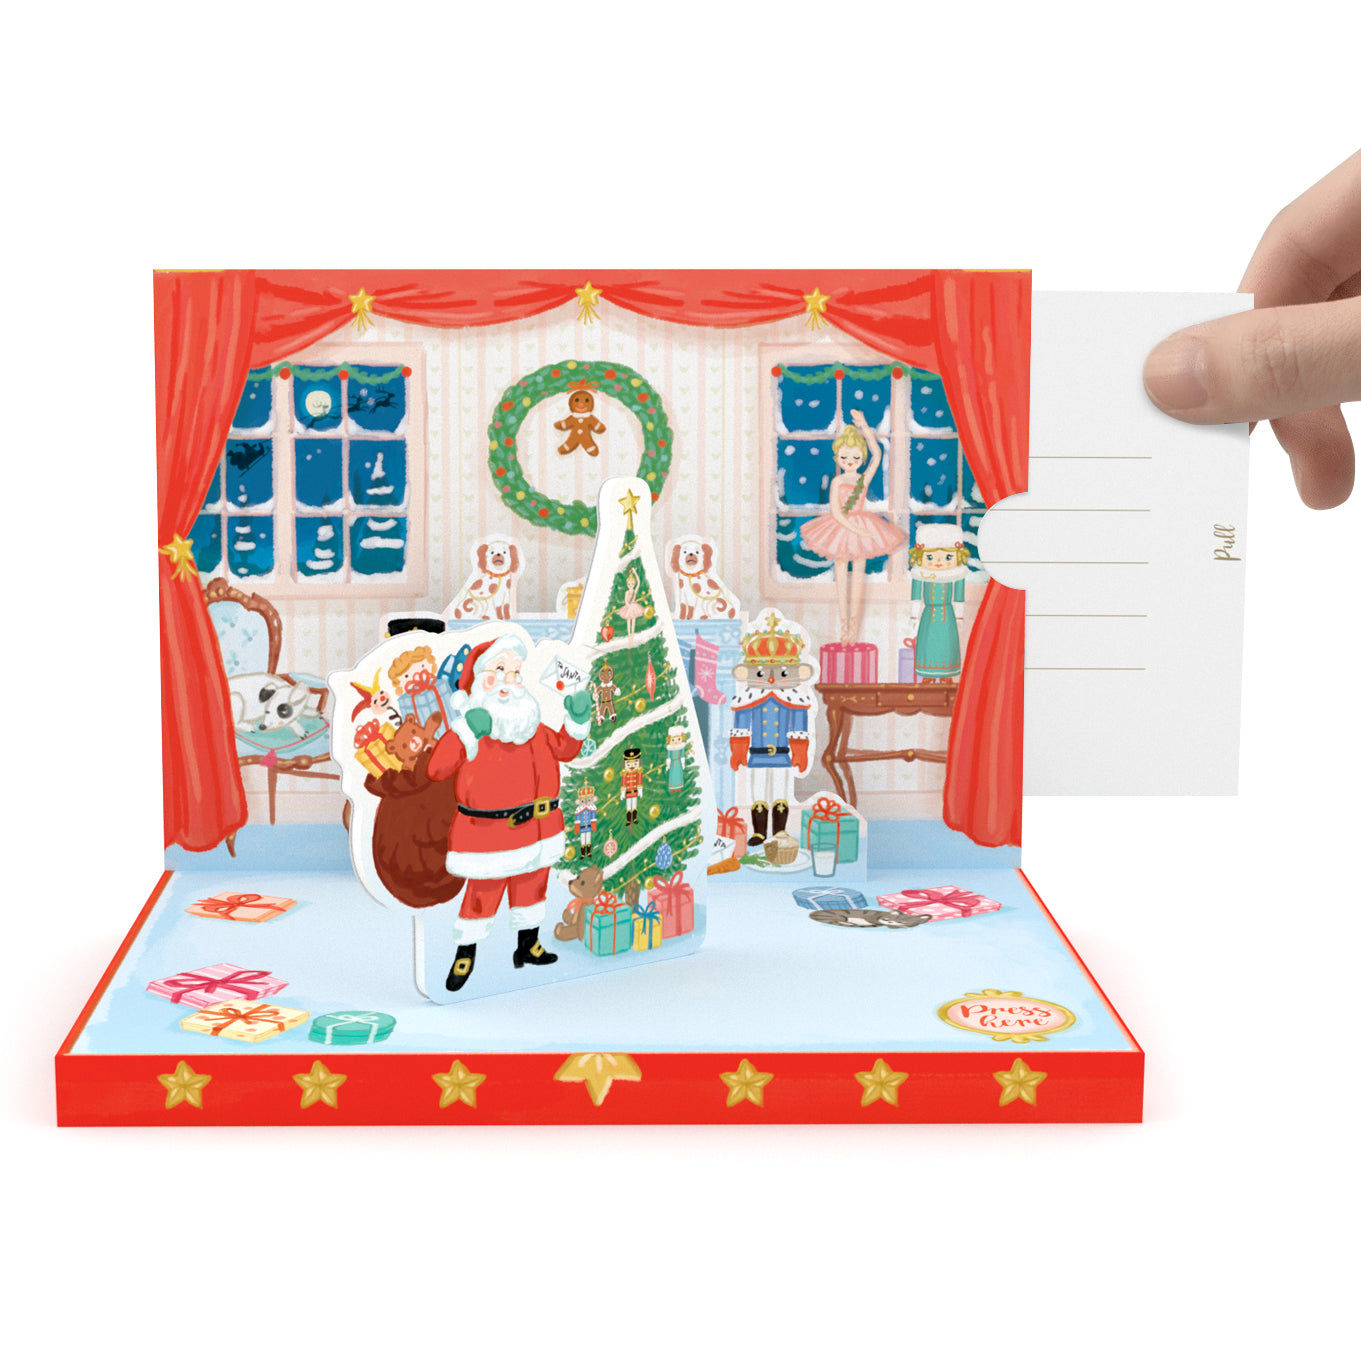 Have A Magical Christmas Music Box Card Novelty Dancing Musical Christmas Card